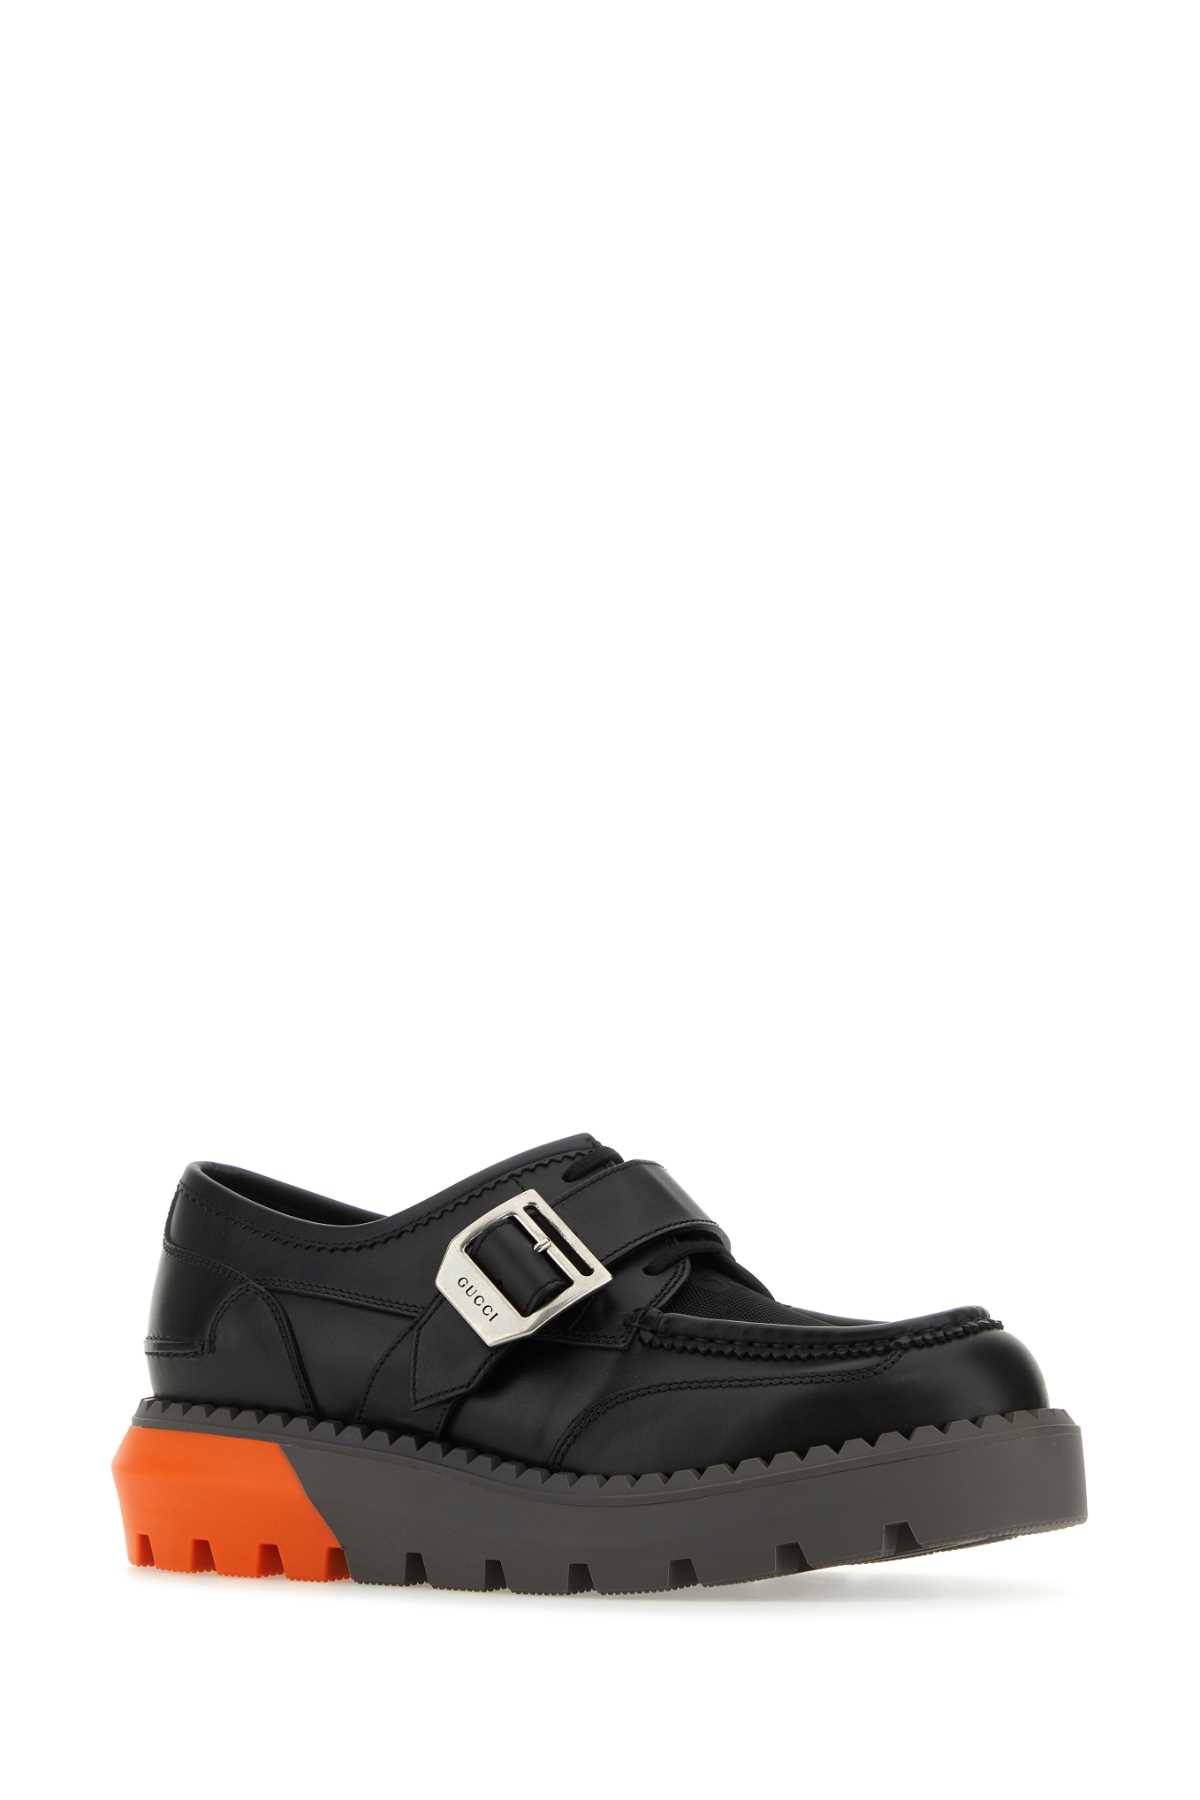 Shop Gucci Black Leather Loafers In Blackblack